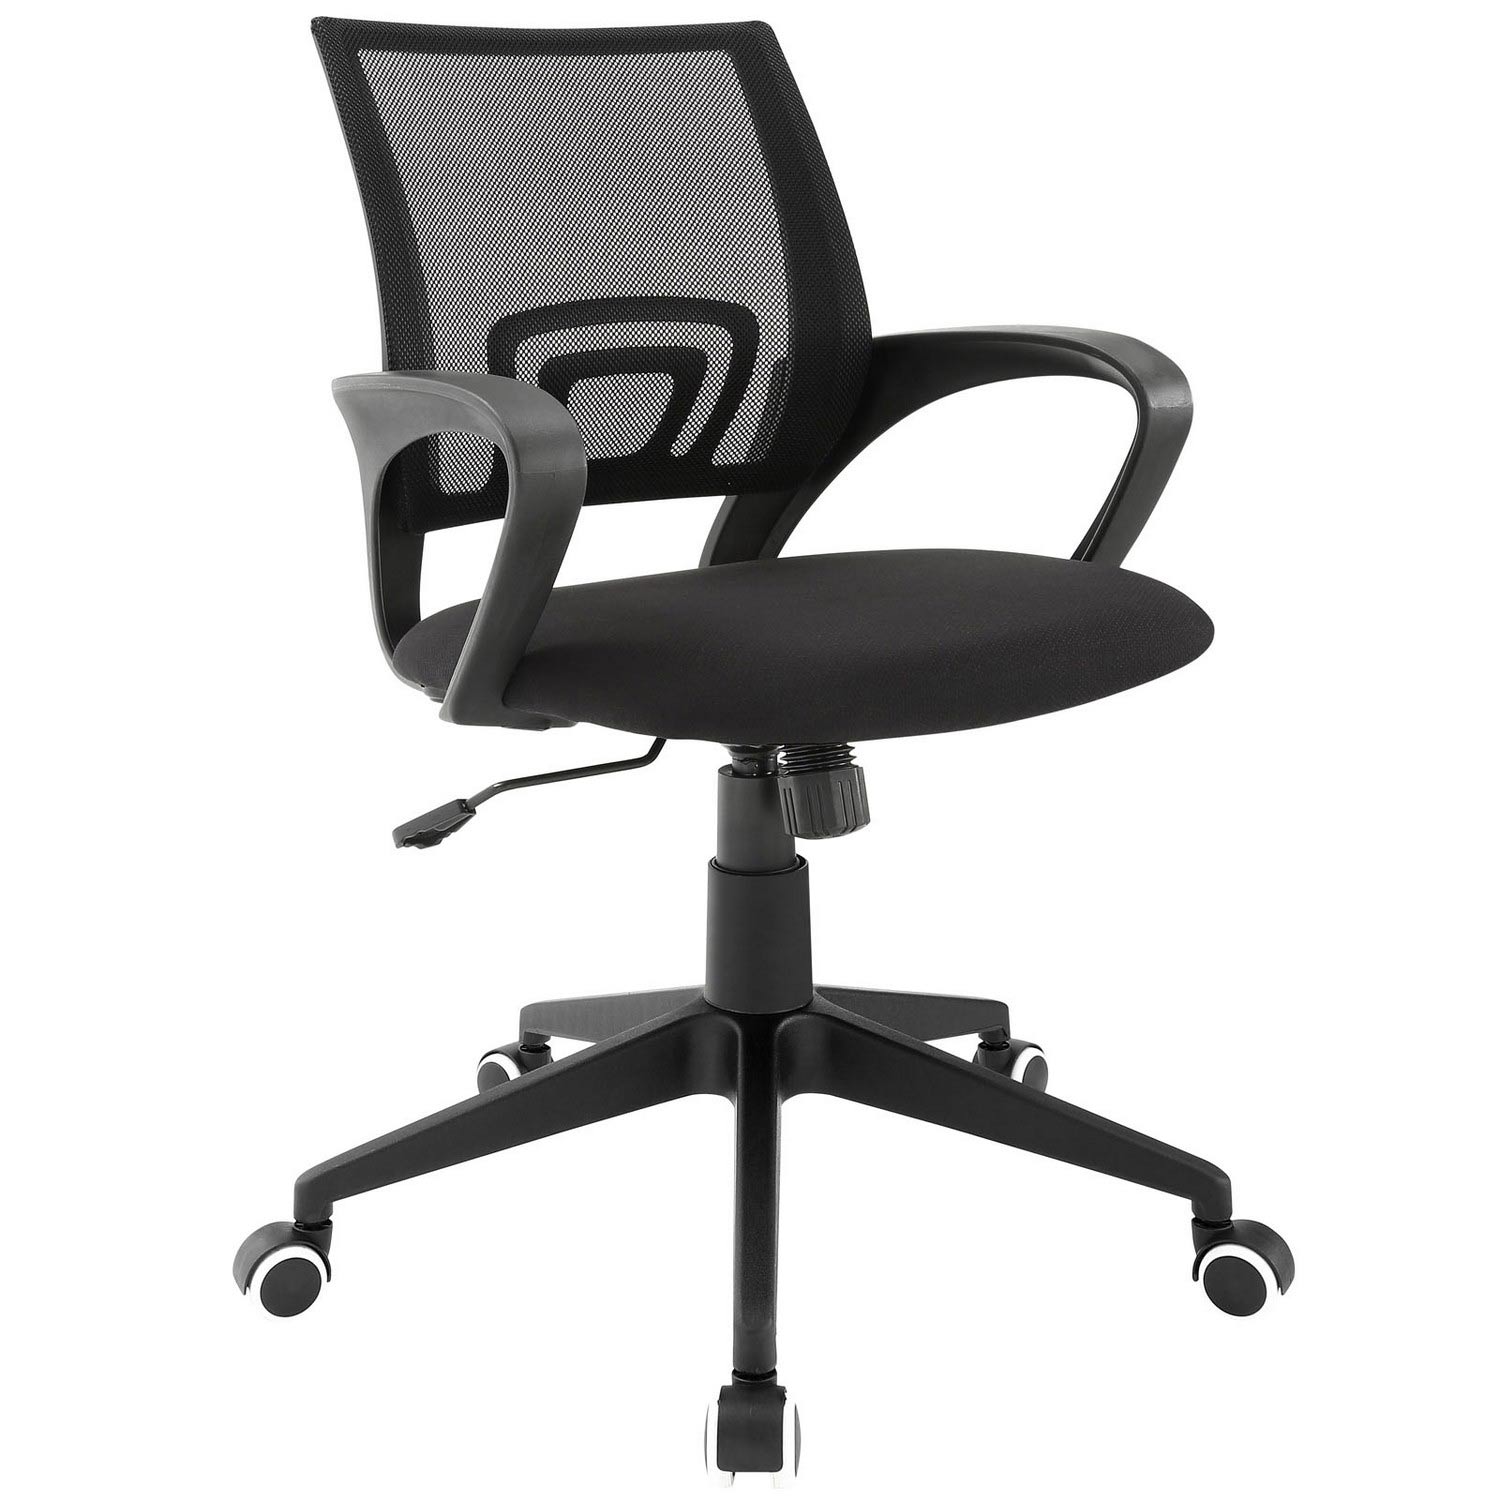 Modway Twilight Office Chair - Black